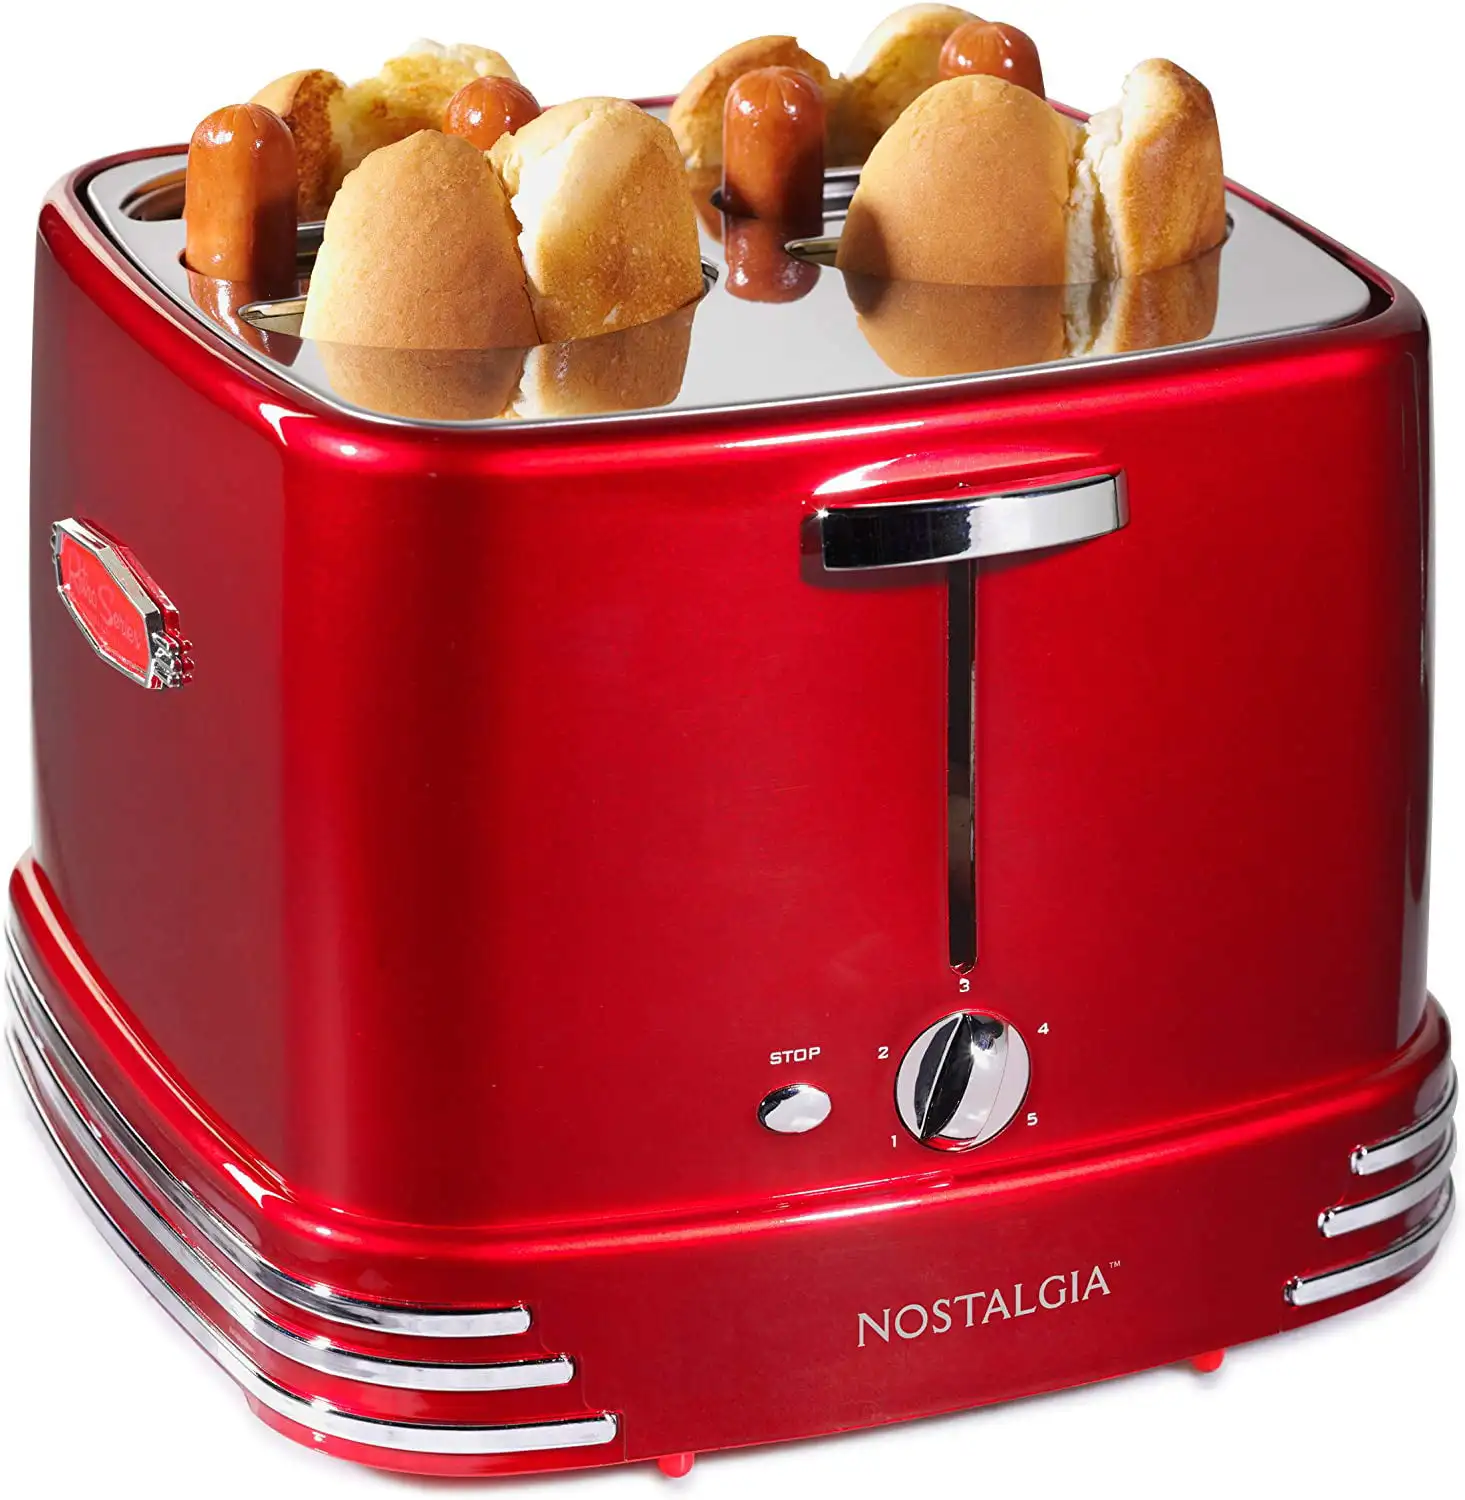 

Nostalgia RHDT800RETRORED Retro Pop-Up Hot Dog Toaster, 4 Link and 4 Bun Capacity with Mini Tongs, Retro Red